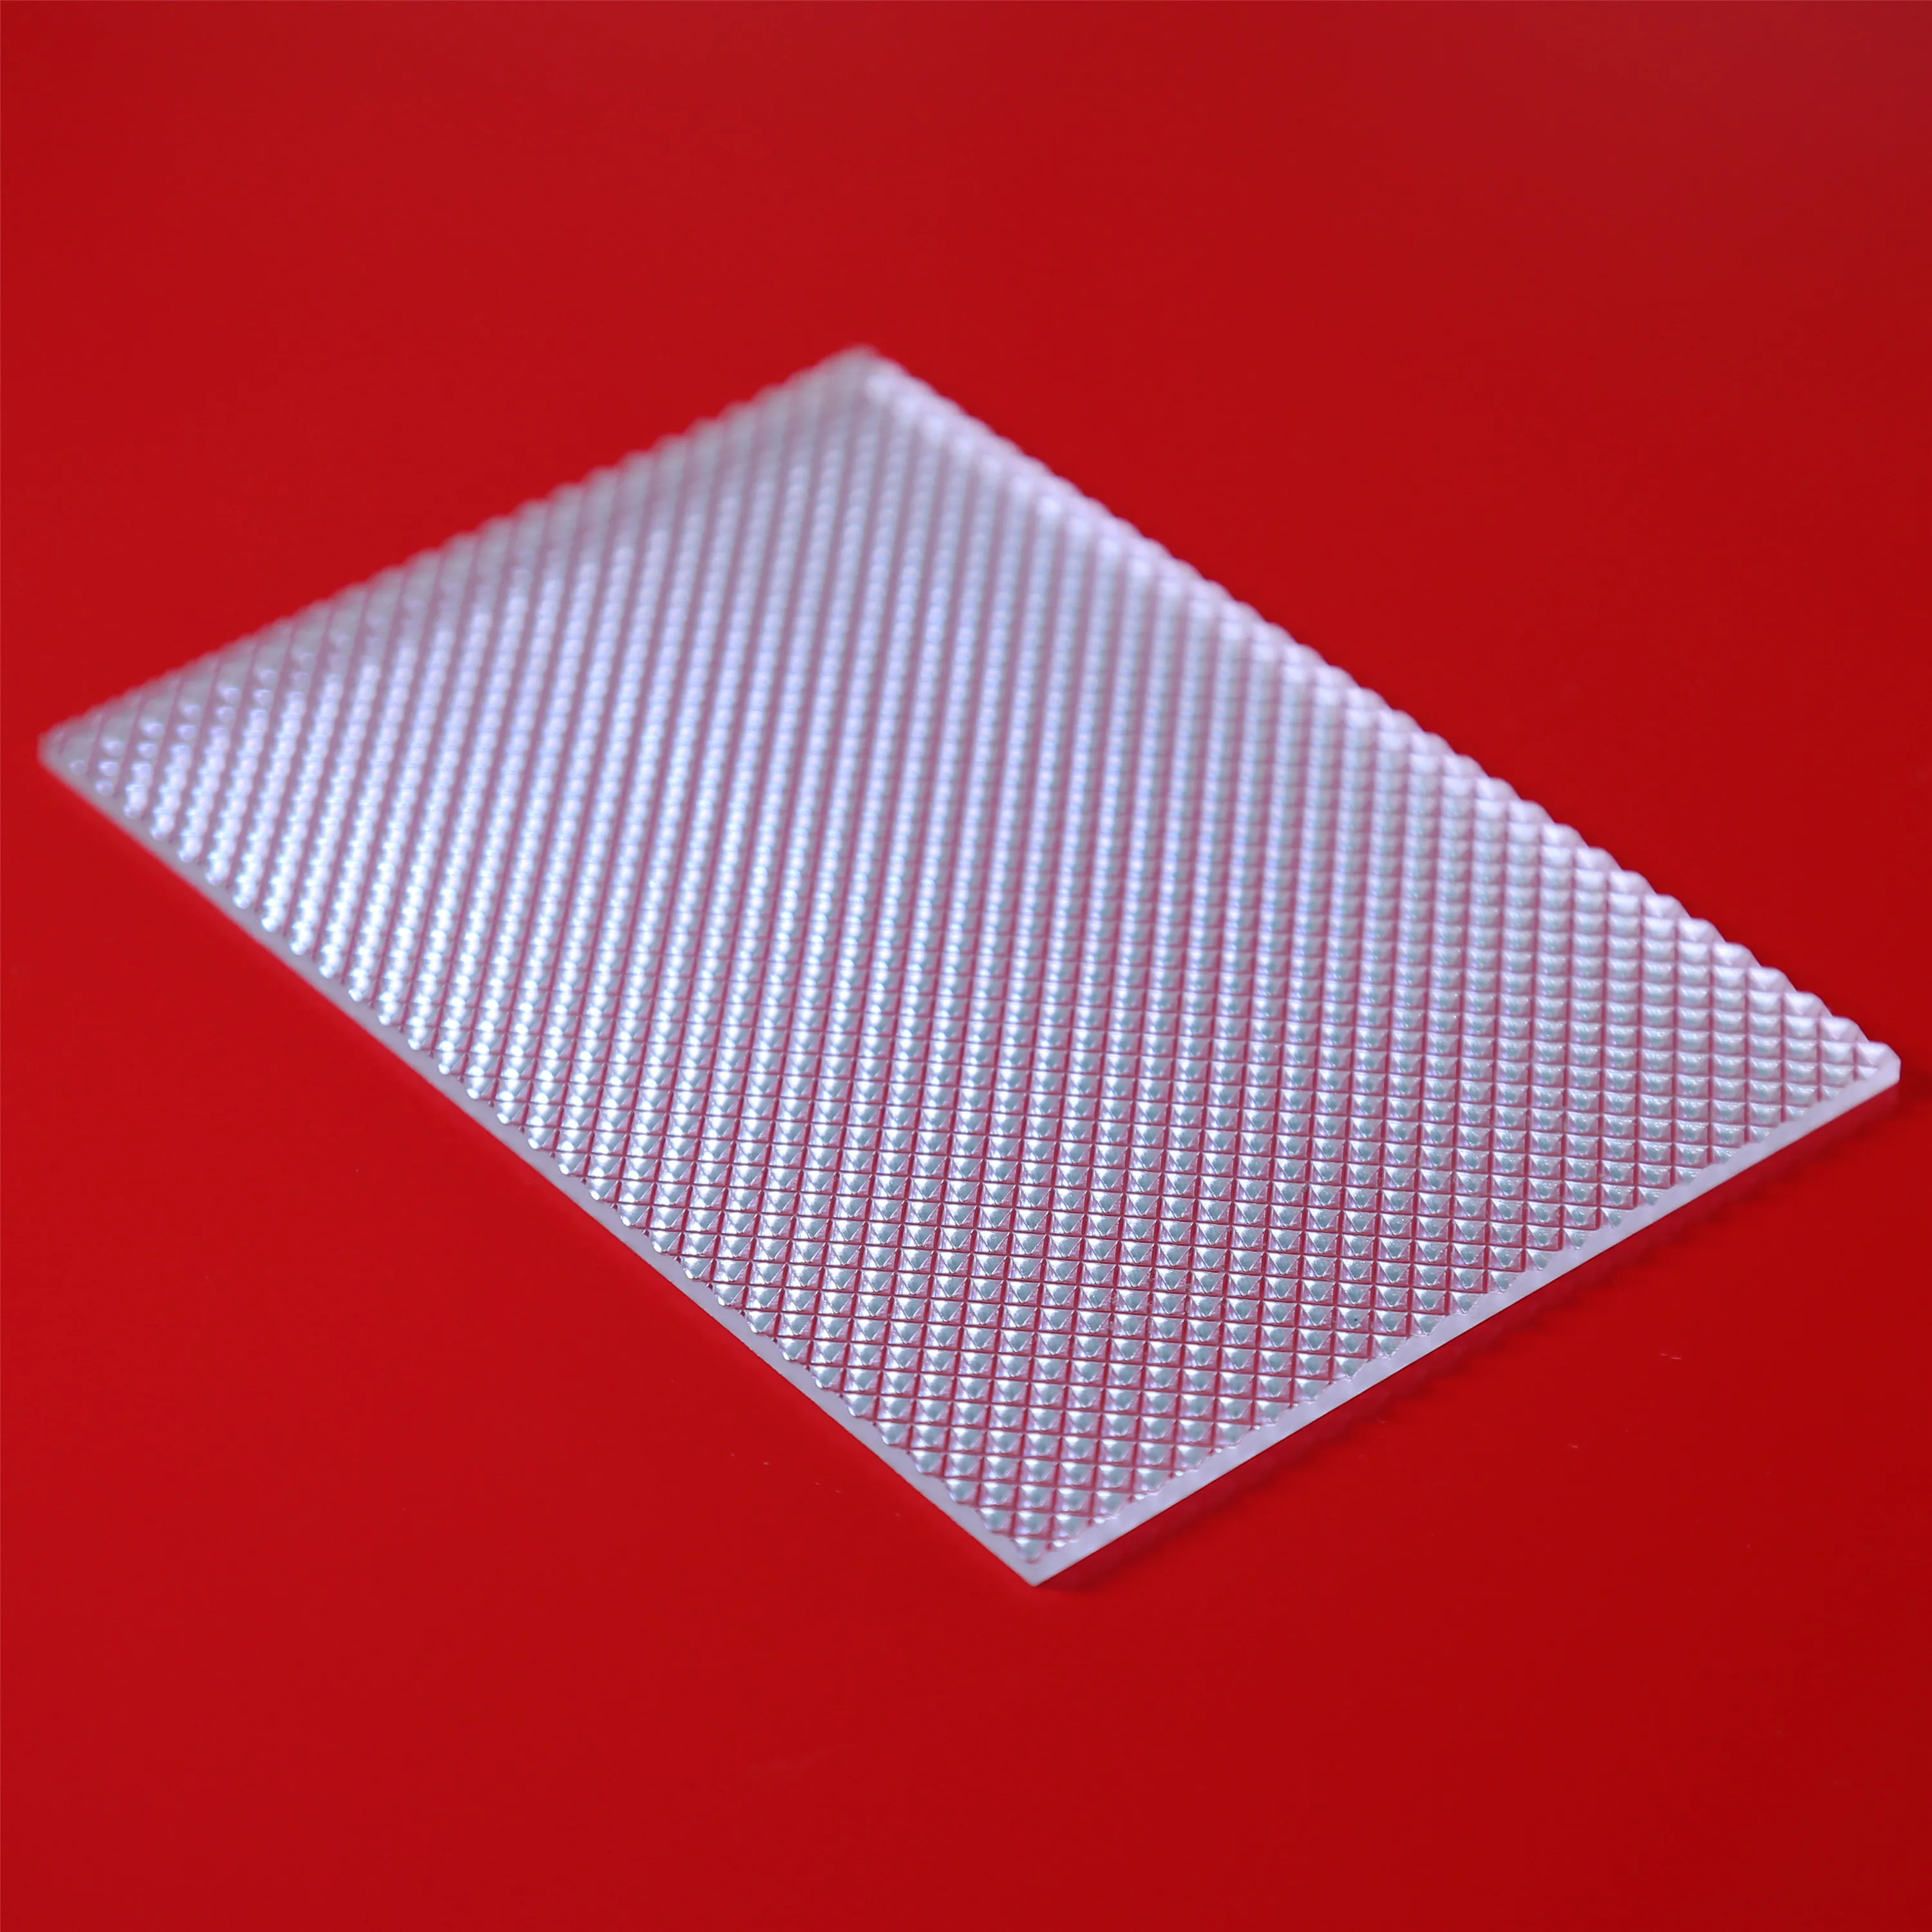 High light transmission light diffuse polycarbonate prism sheets for LED lights covers panels